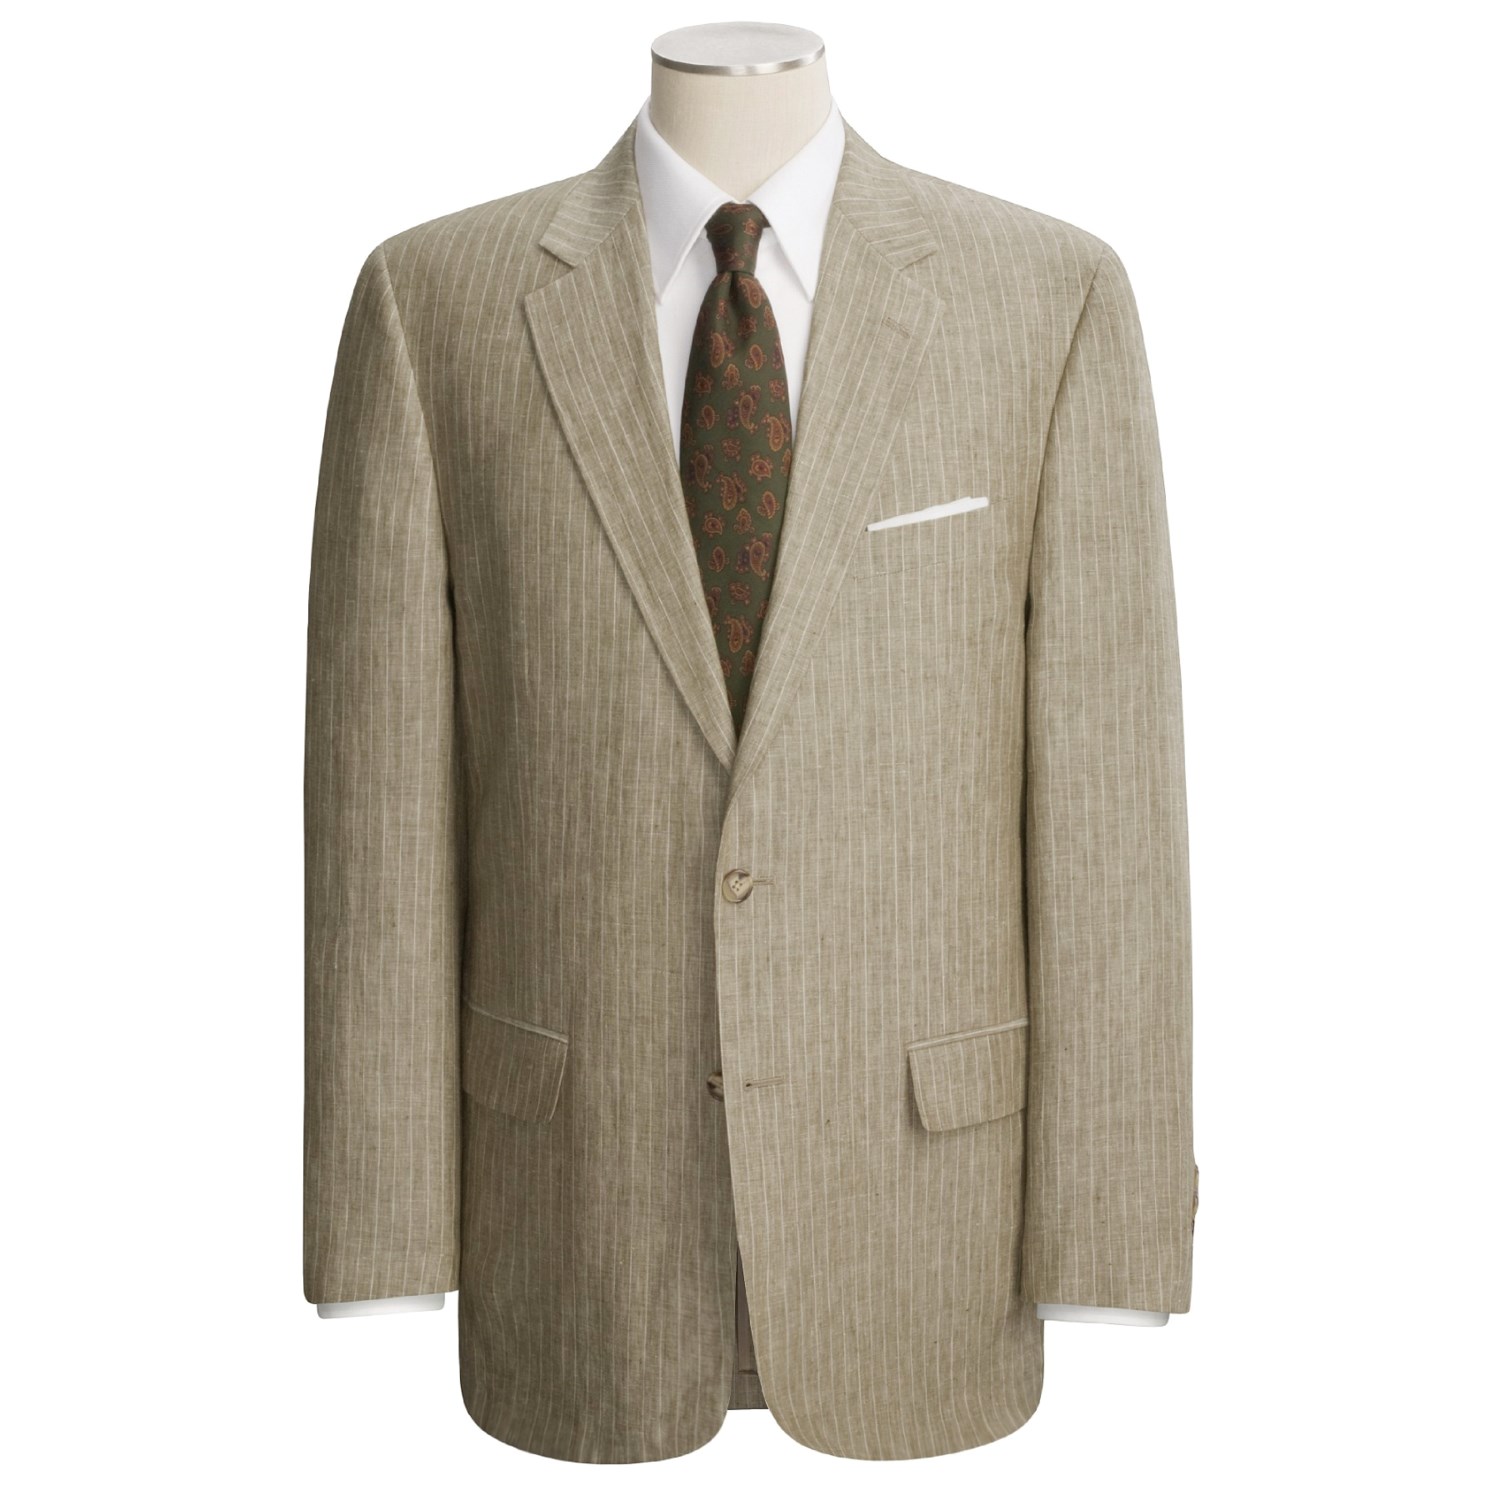 Haspel Linen Stripe Suit (For Men) 1507N - Save 37%